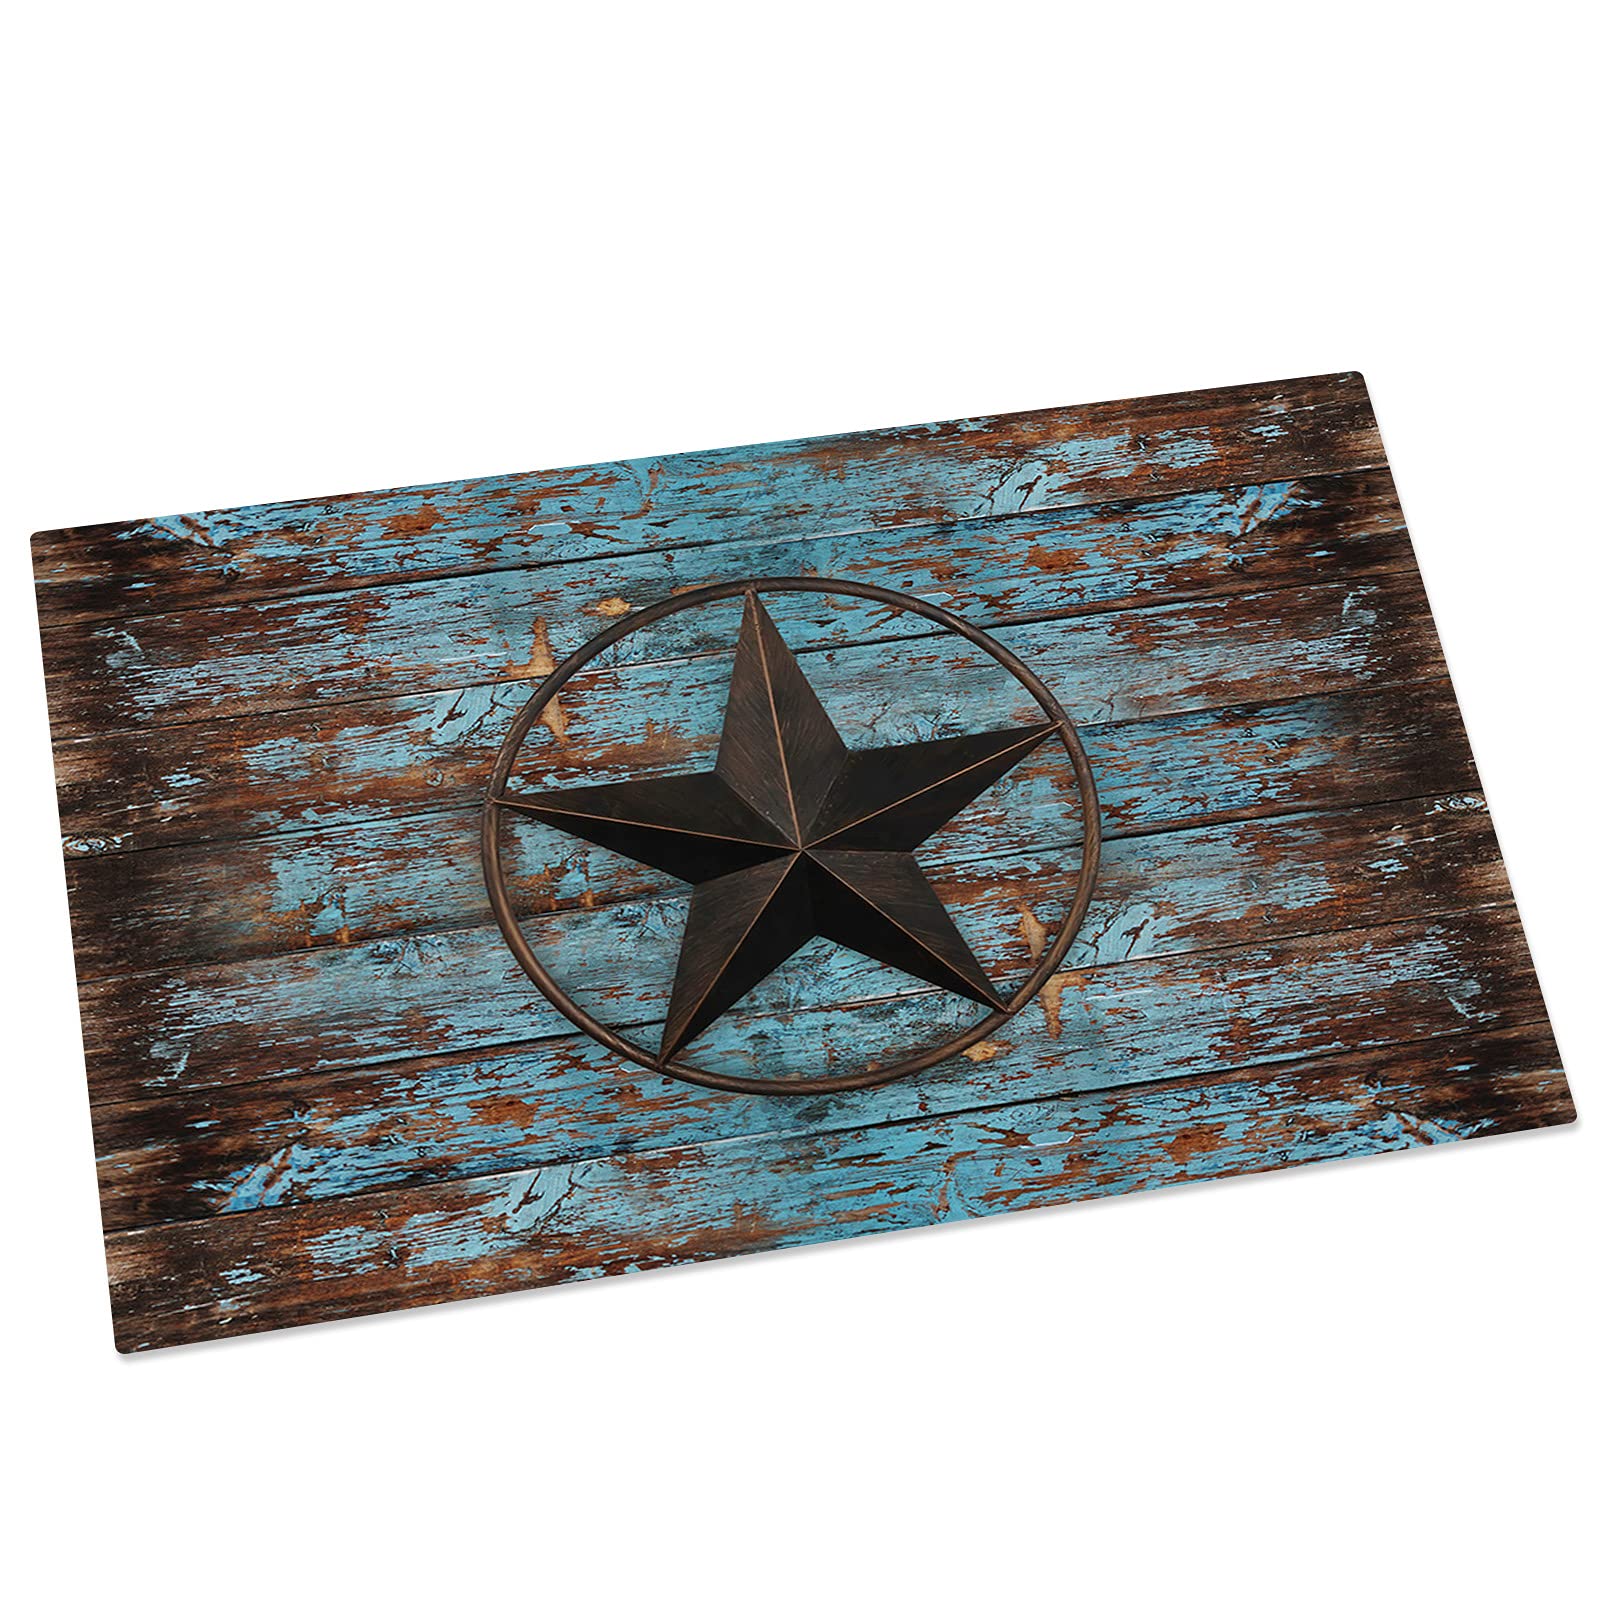 Western Country Star Texas Vintage Blue Wood Board,Non Slip Indoor Floor Mat Bath Rug,Rustic Wooden Grain Entrance Carpet for Bedroom Kitchen Living Room Bathroom Decor 16x24In